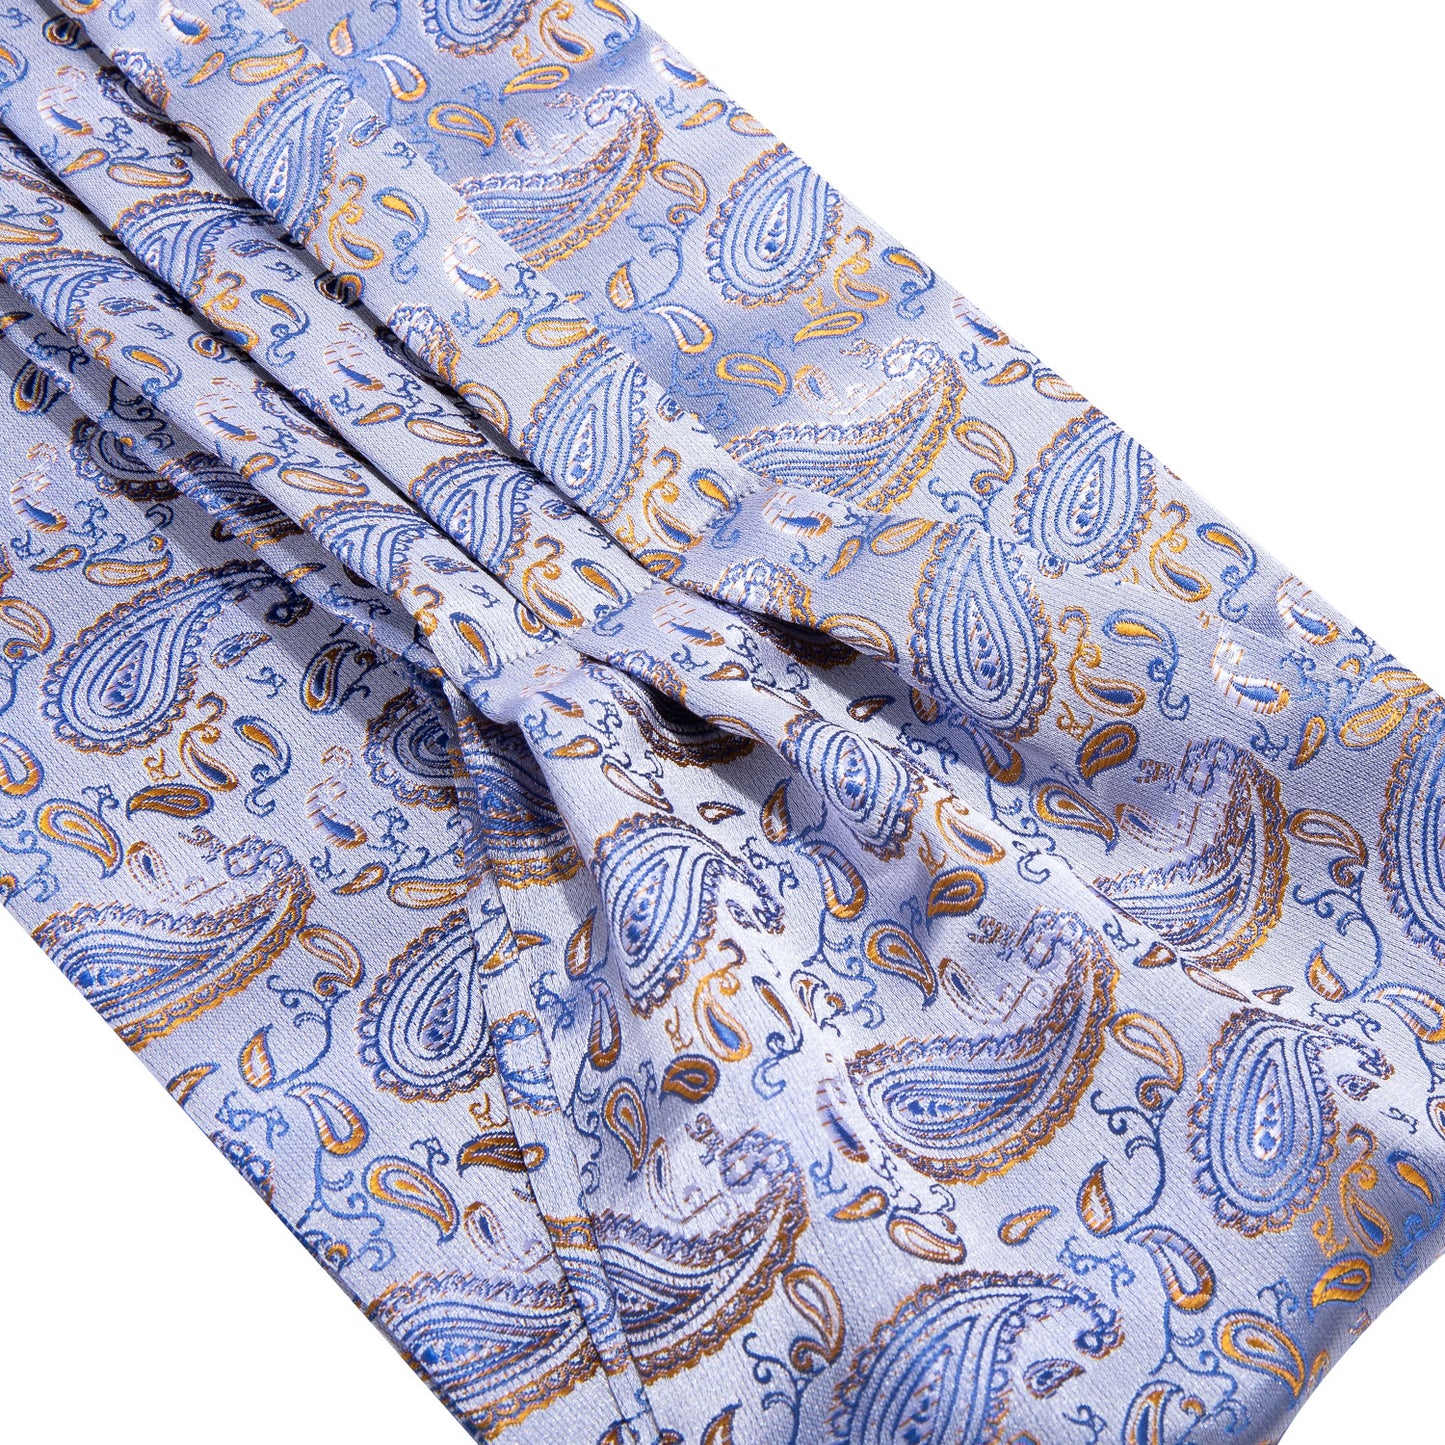 Victorian Ascot Silky Floral Day Cravat Set [Sky Paisley]